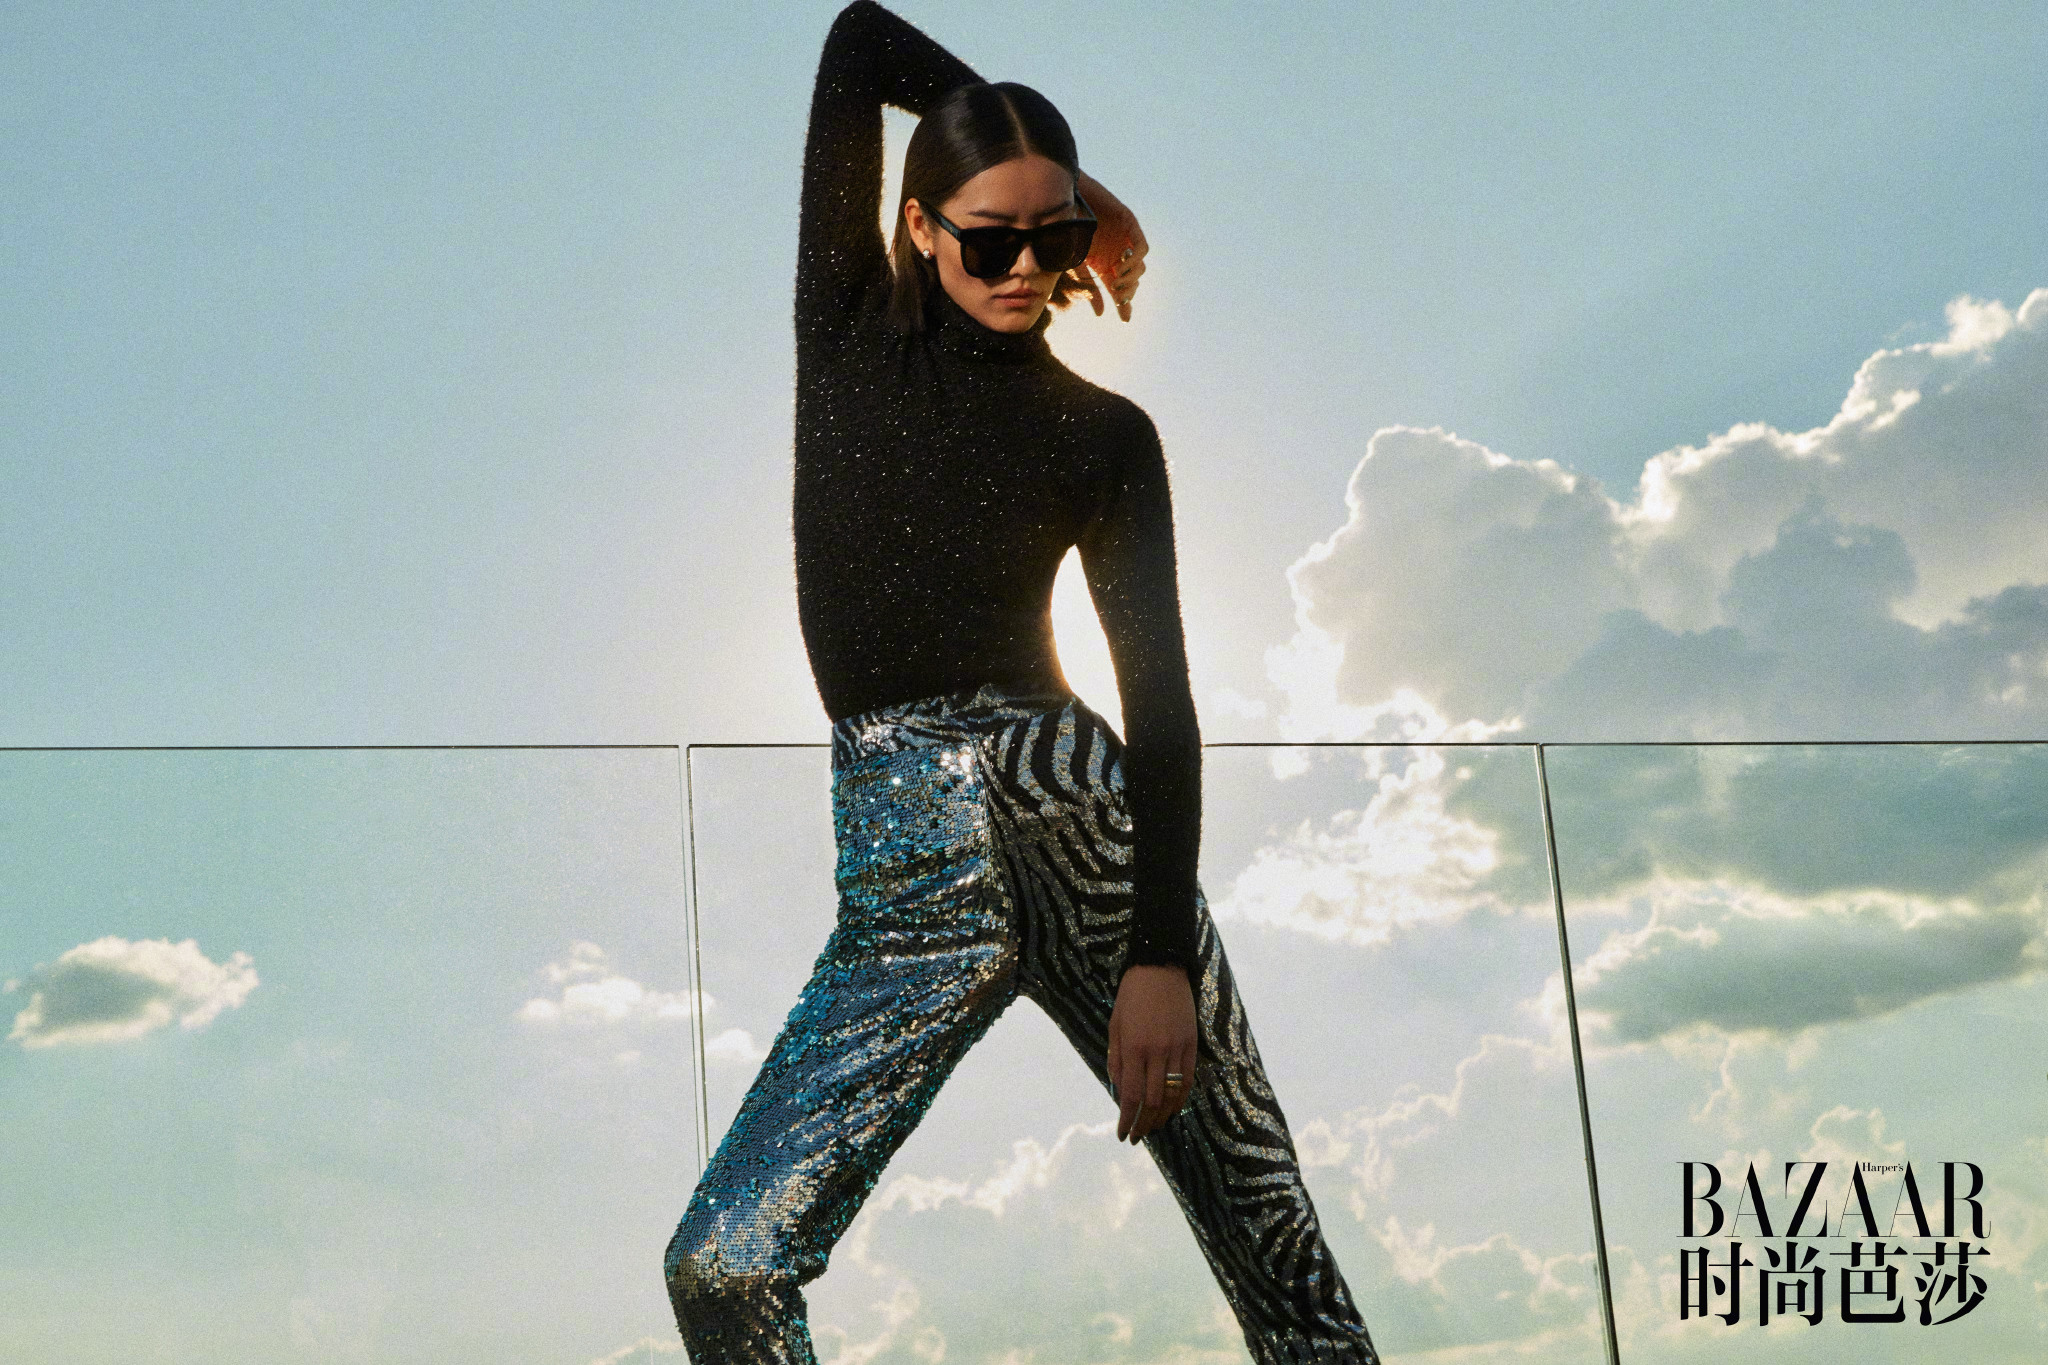 Liu Wen for Harper's Bazaar China August 2018 - sky view and zebra pants